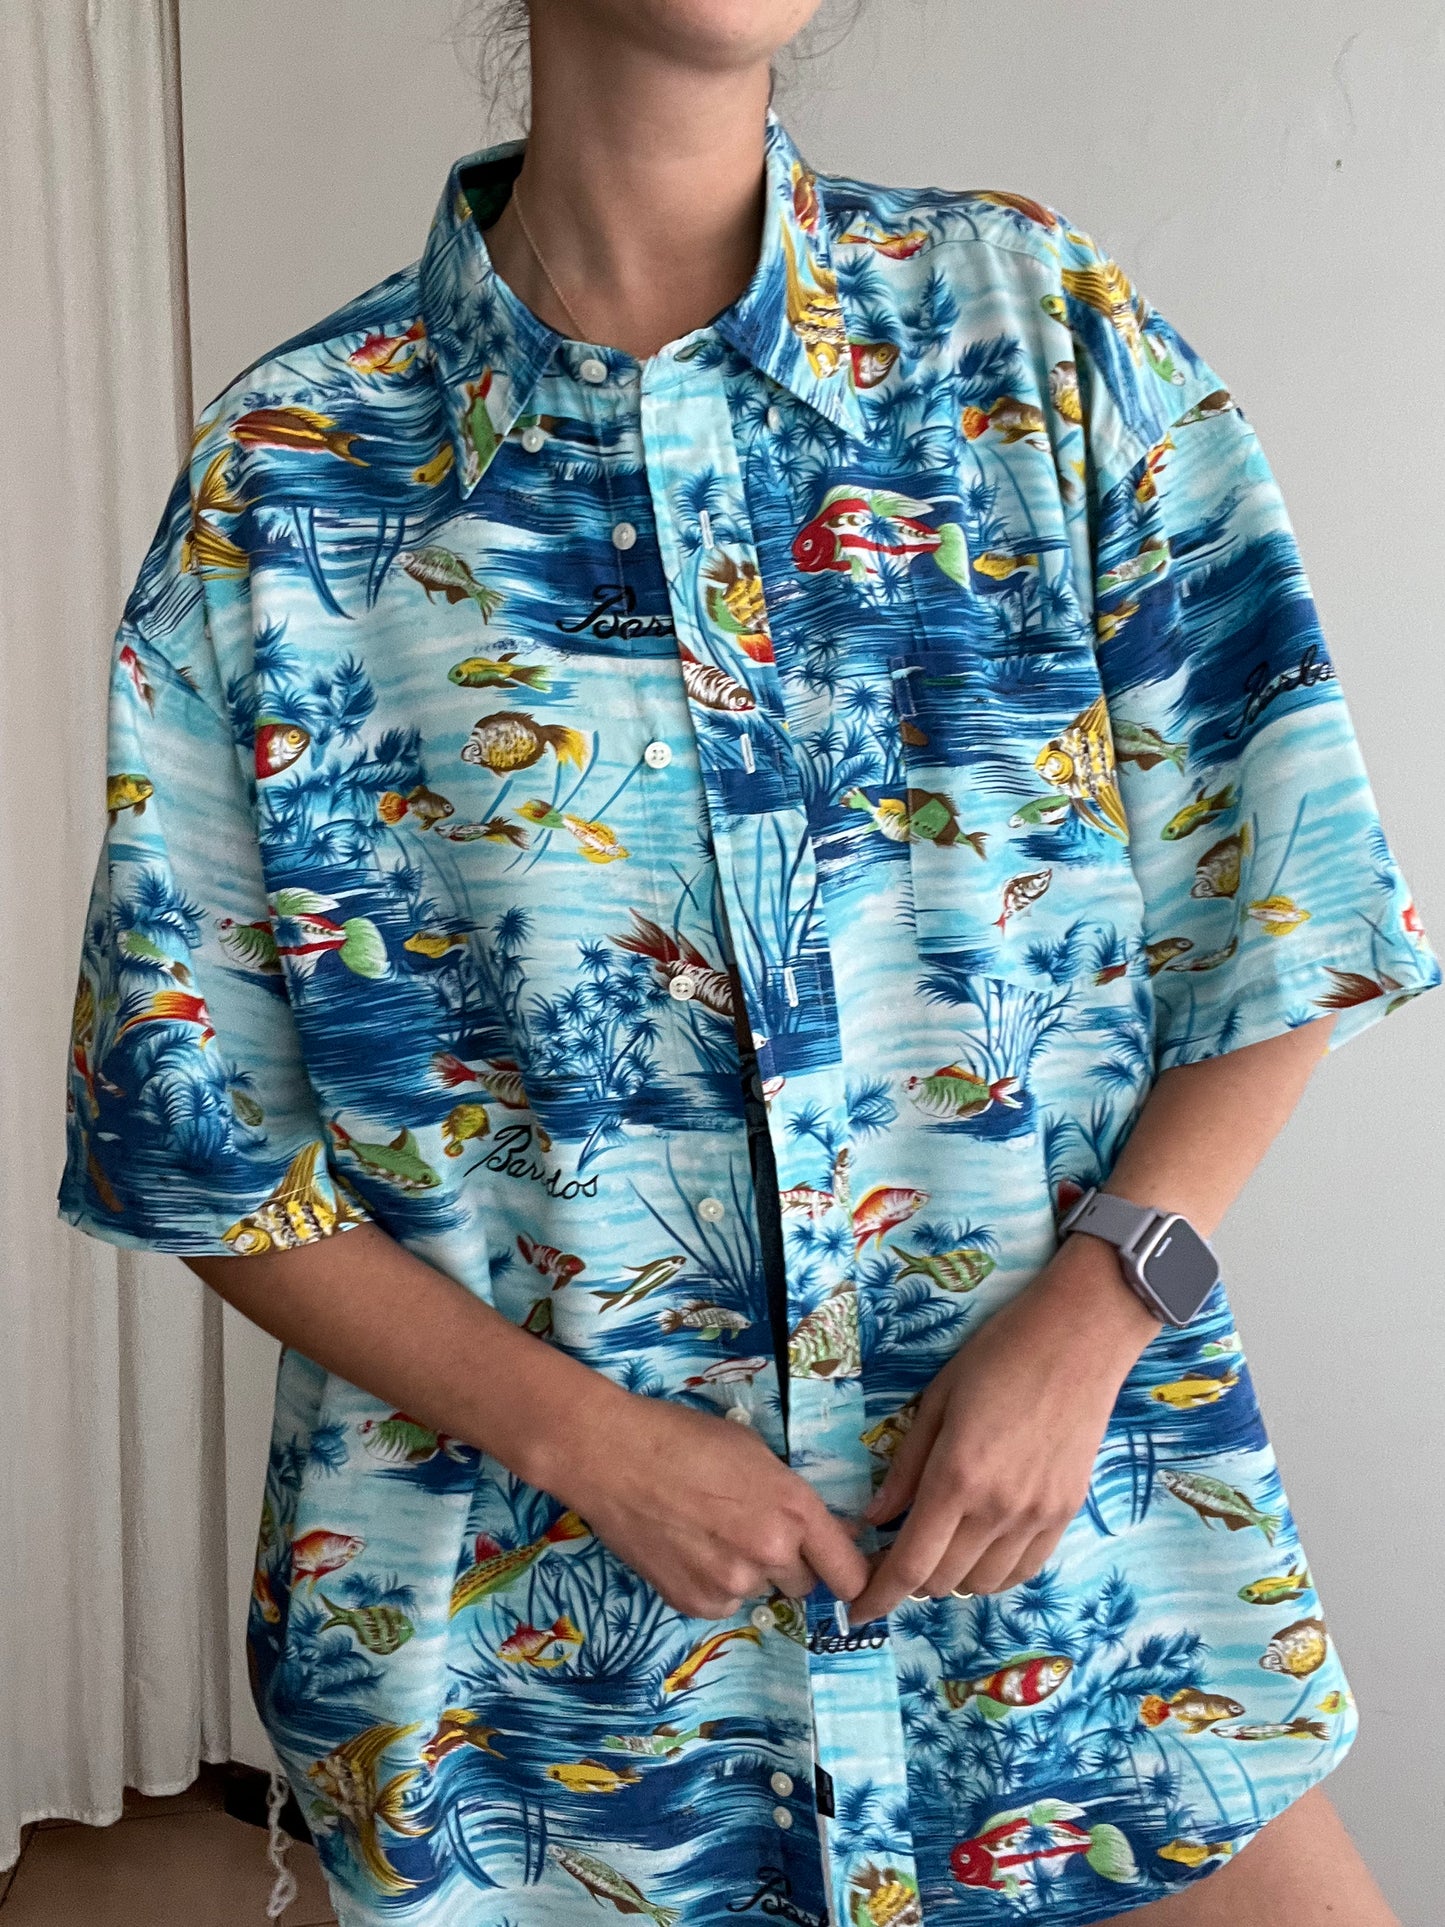 Camicia tropicale Tommy Hilfiger XL